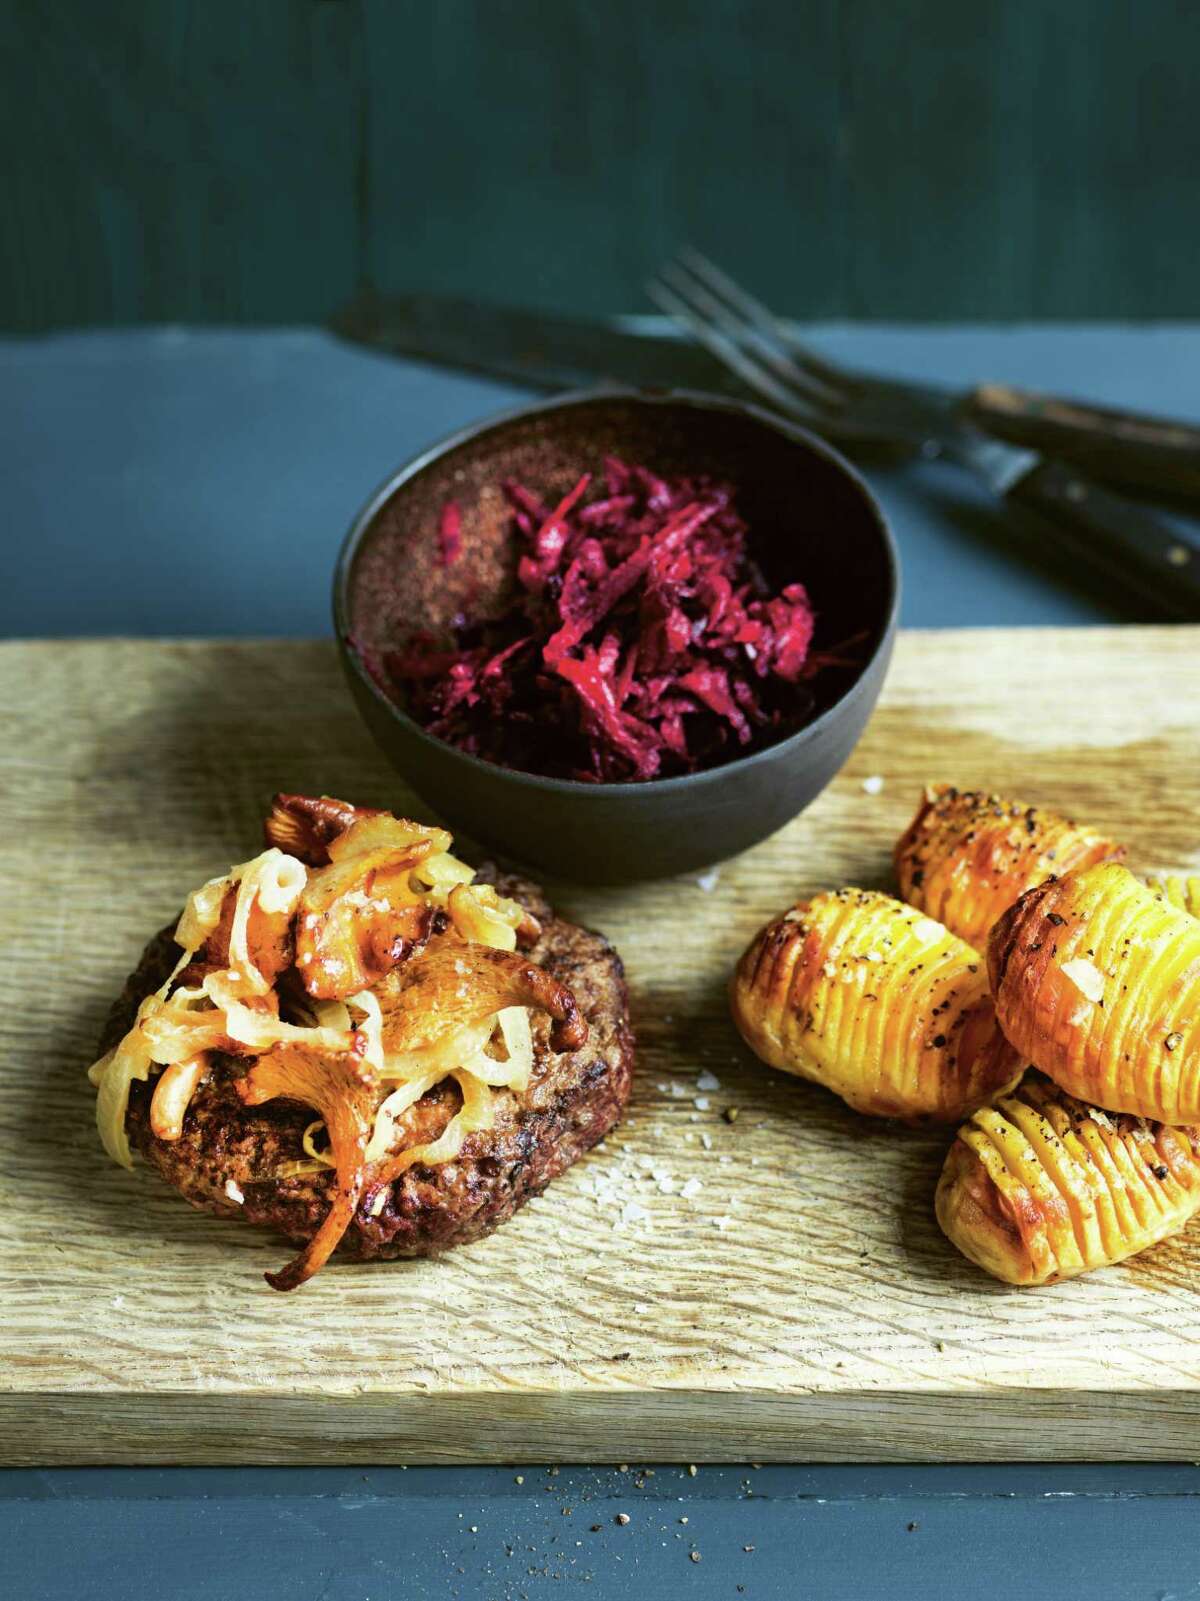 Hakkebof with Hasselback Potatoes from “Copenhagen Food” by Trine Hahnemann (Quadrille)